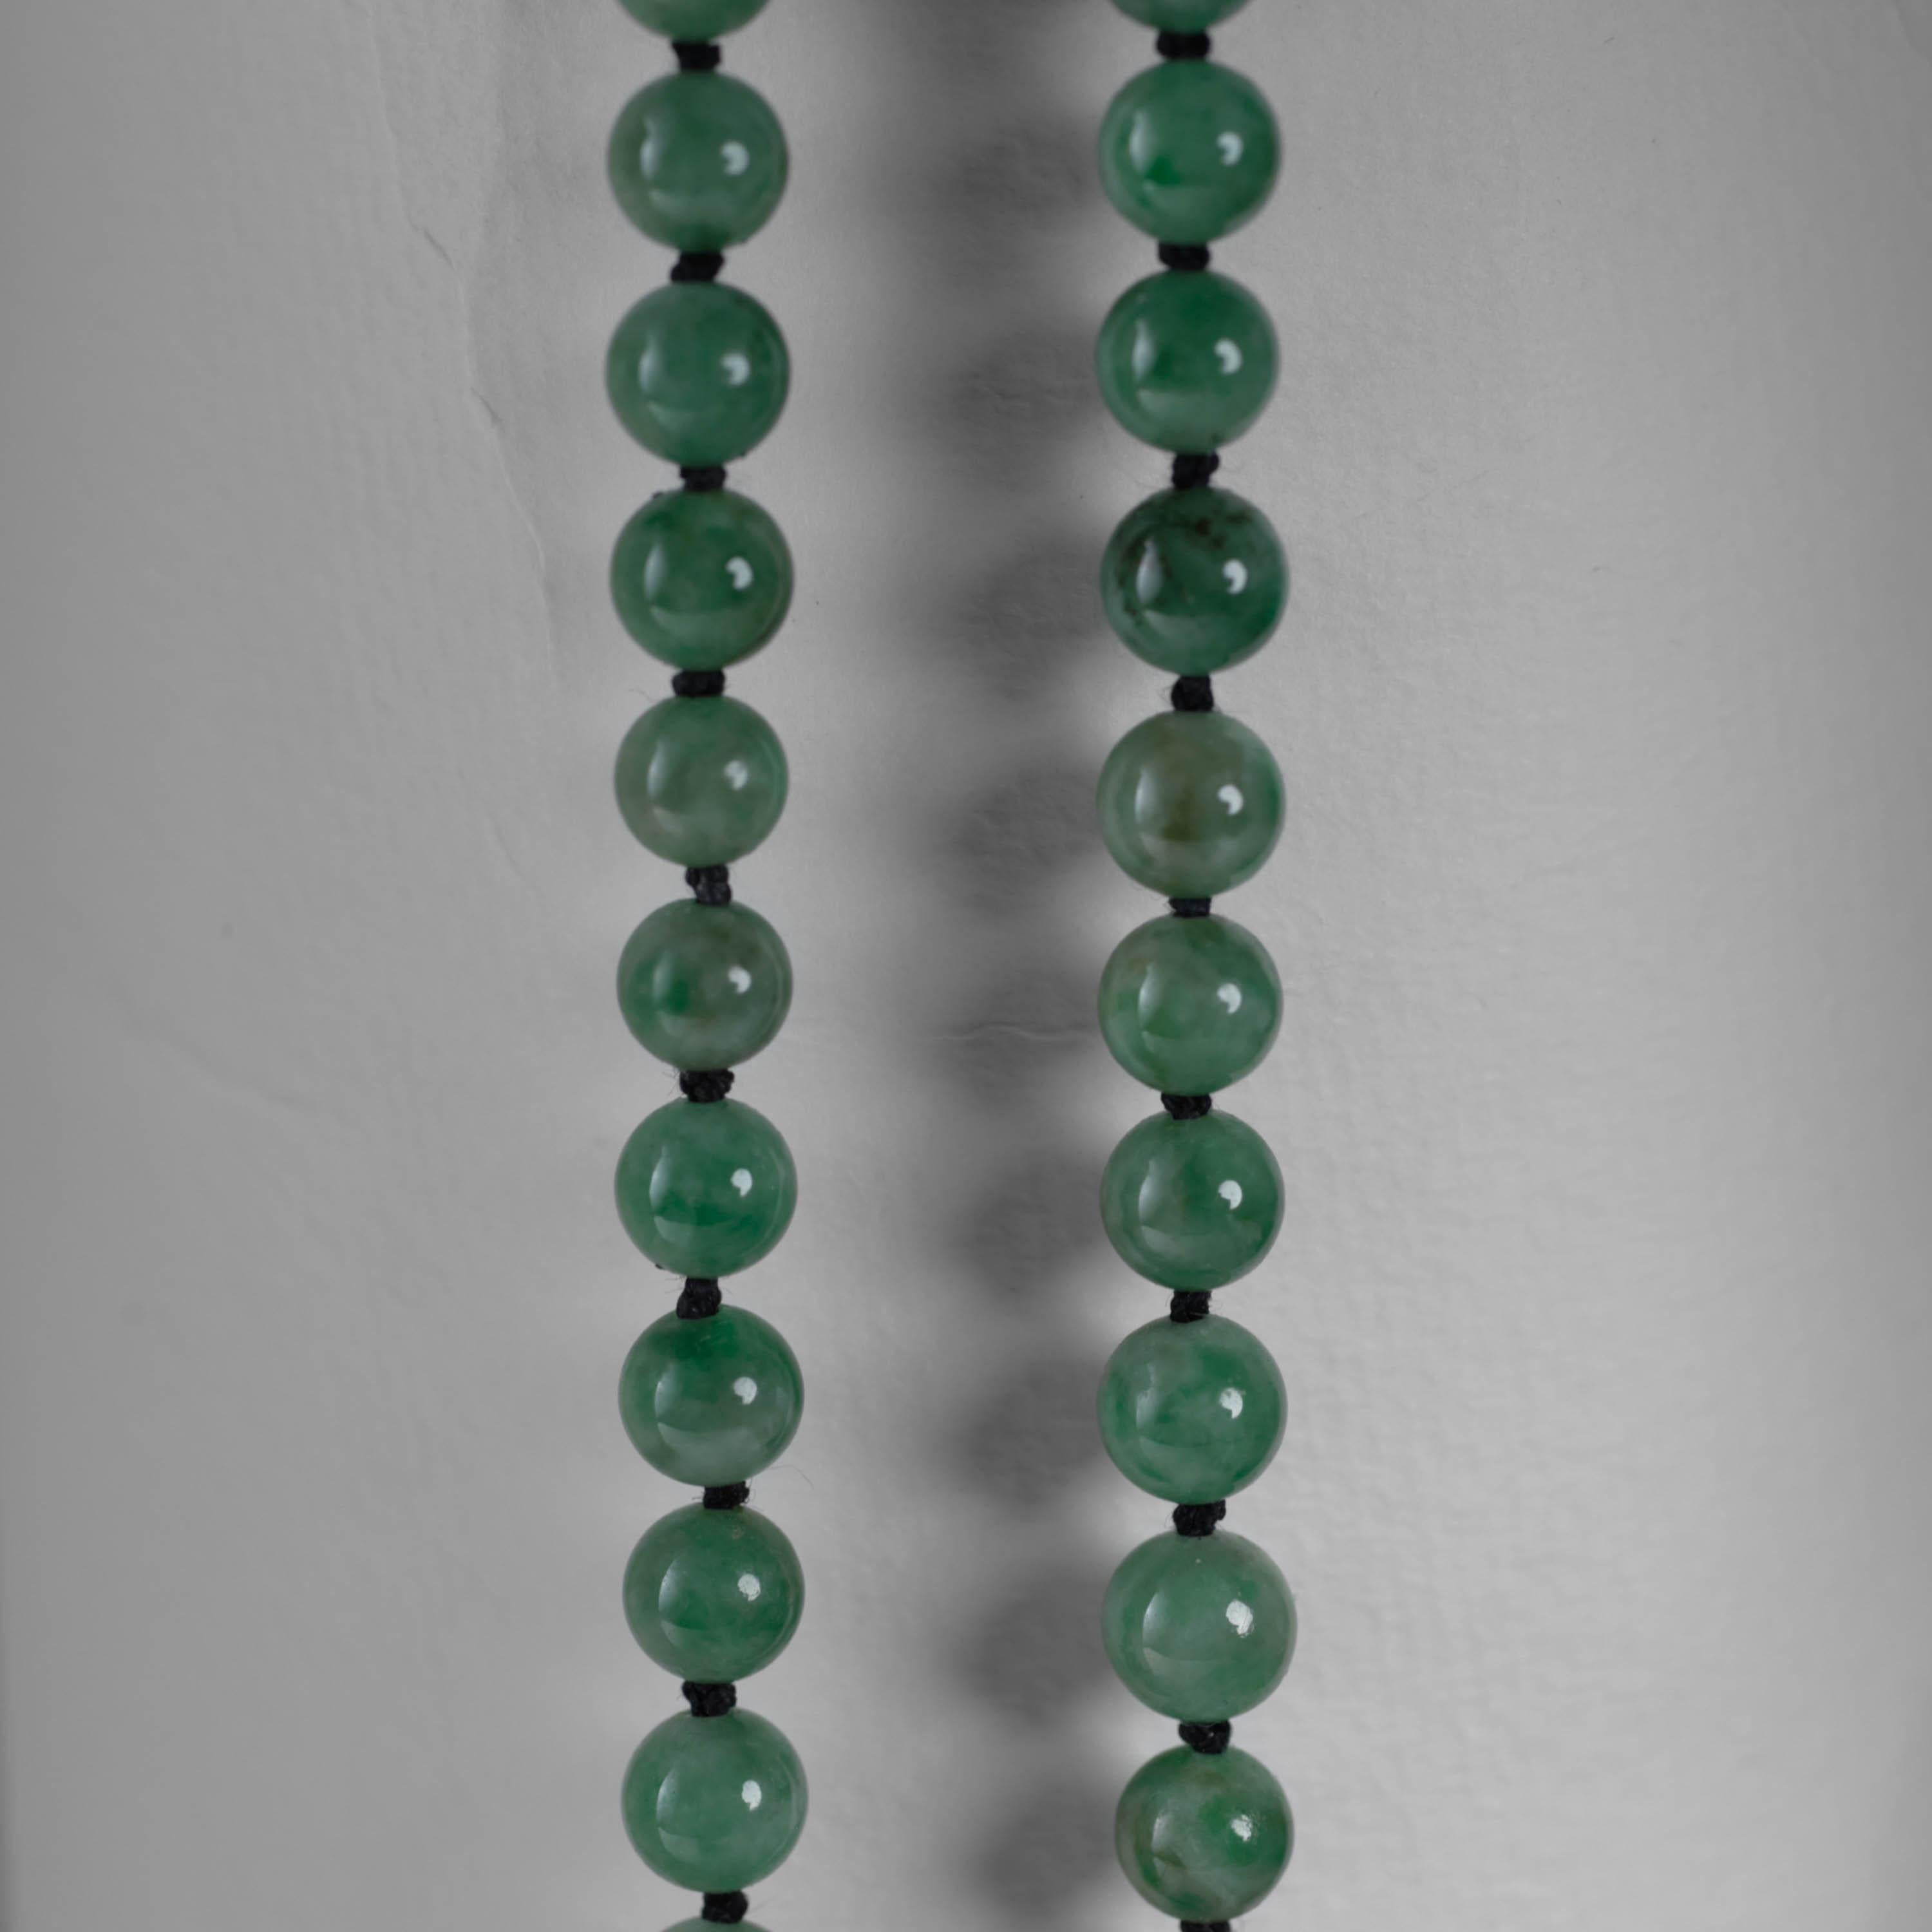 Emerald Green Jade Necklace Certified Untreated, Diamond Clasp, 33